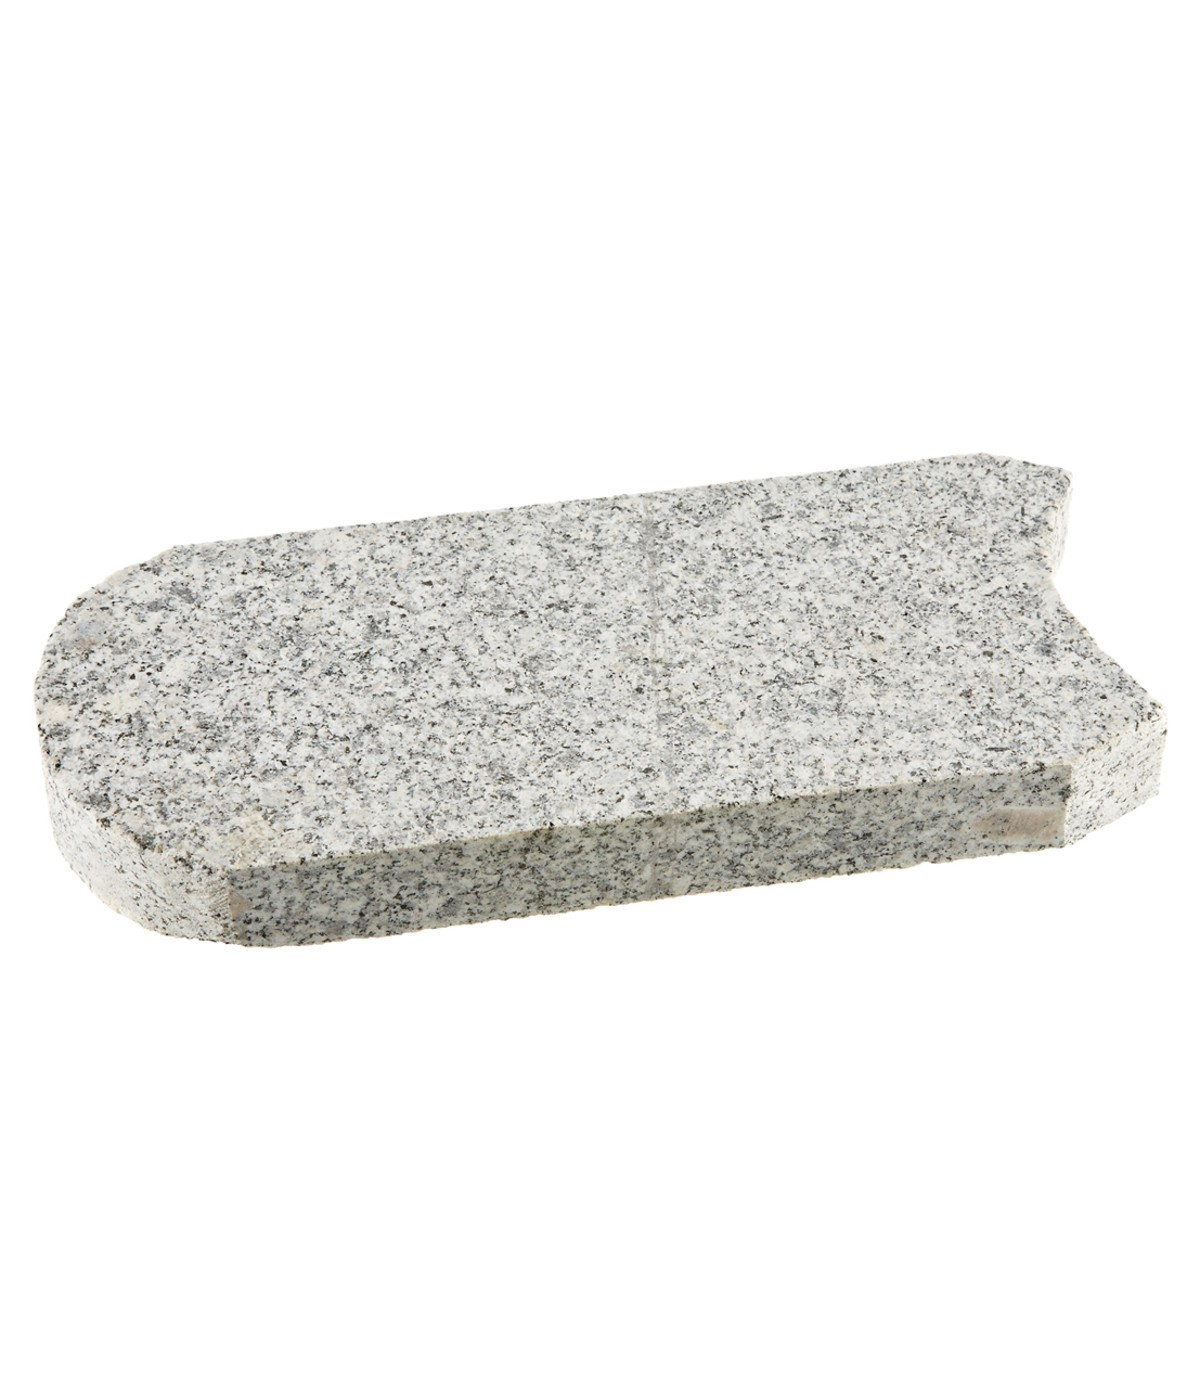 Rasenmähkantensteine Granit, grau